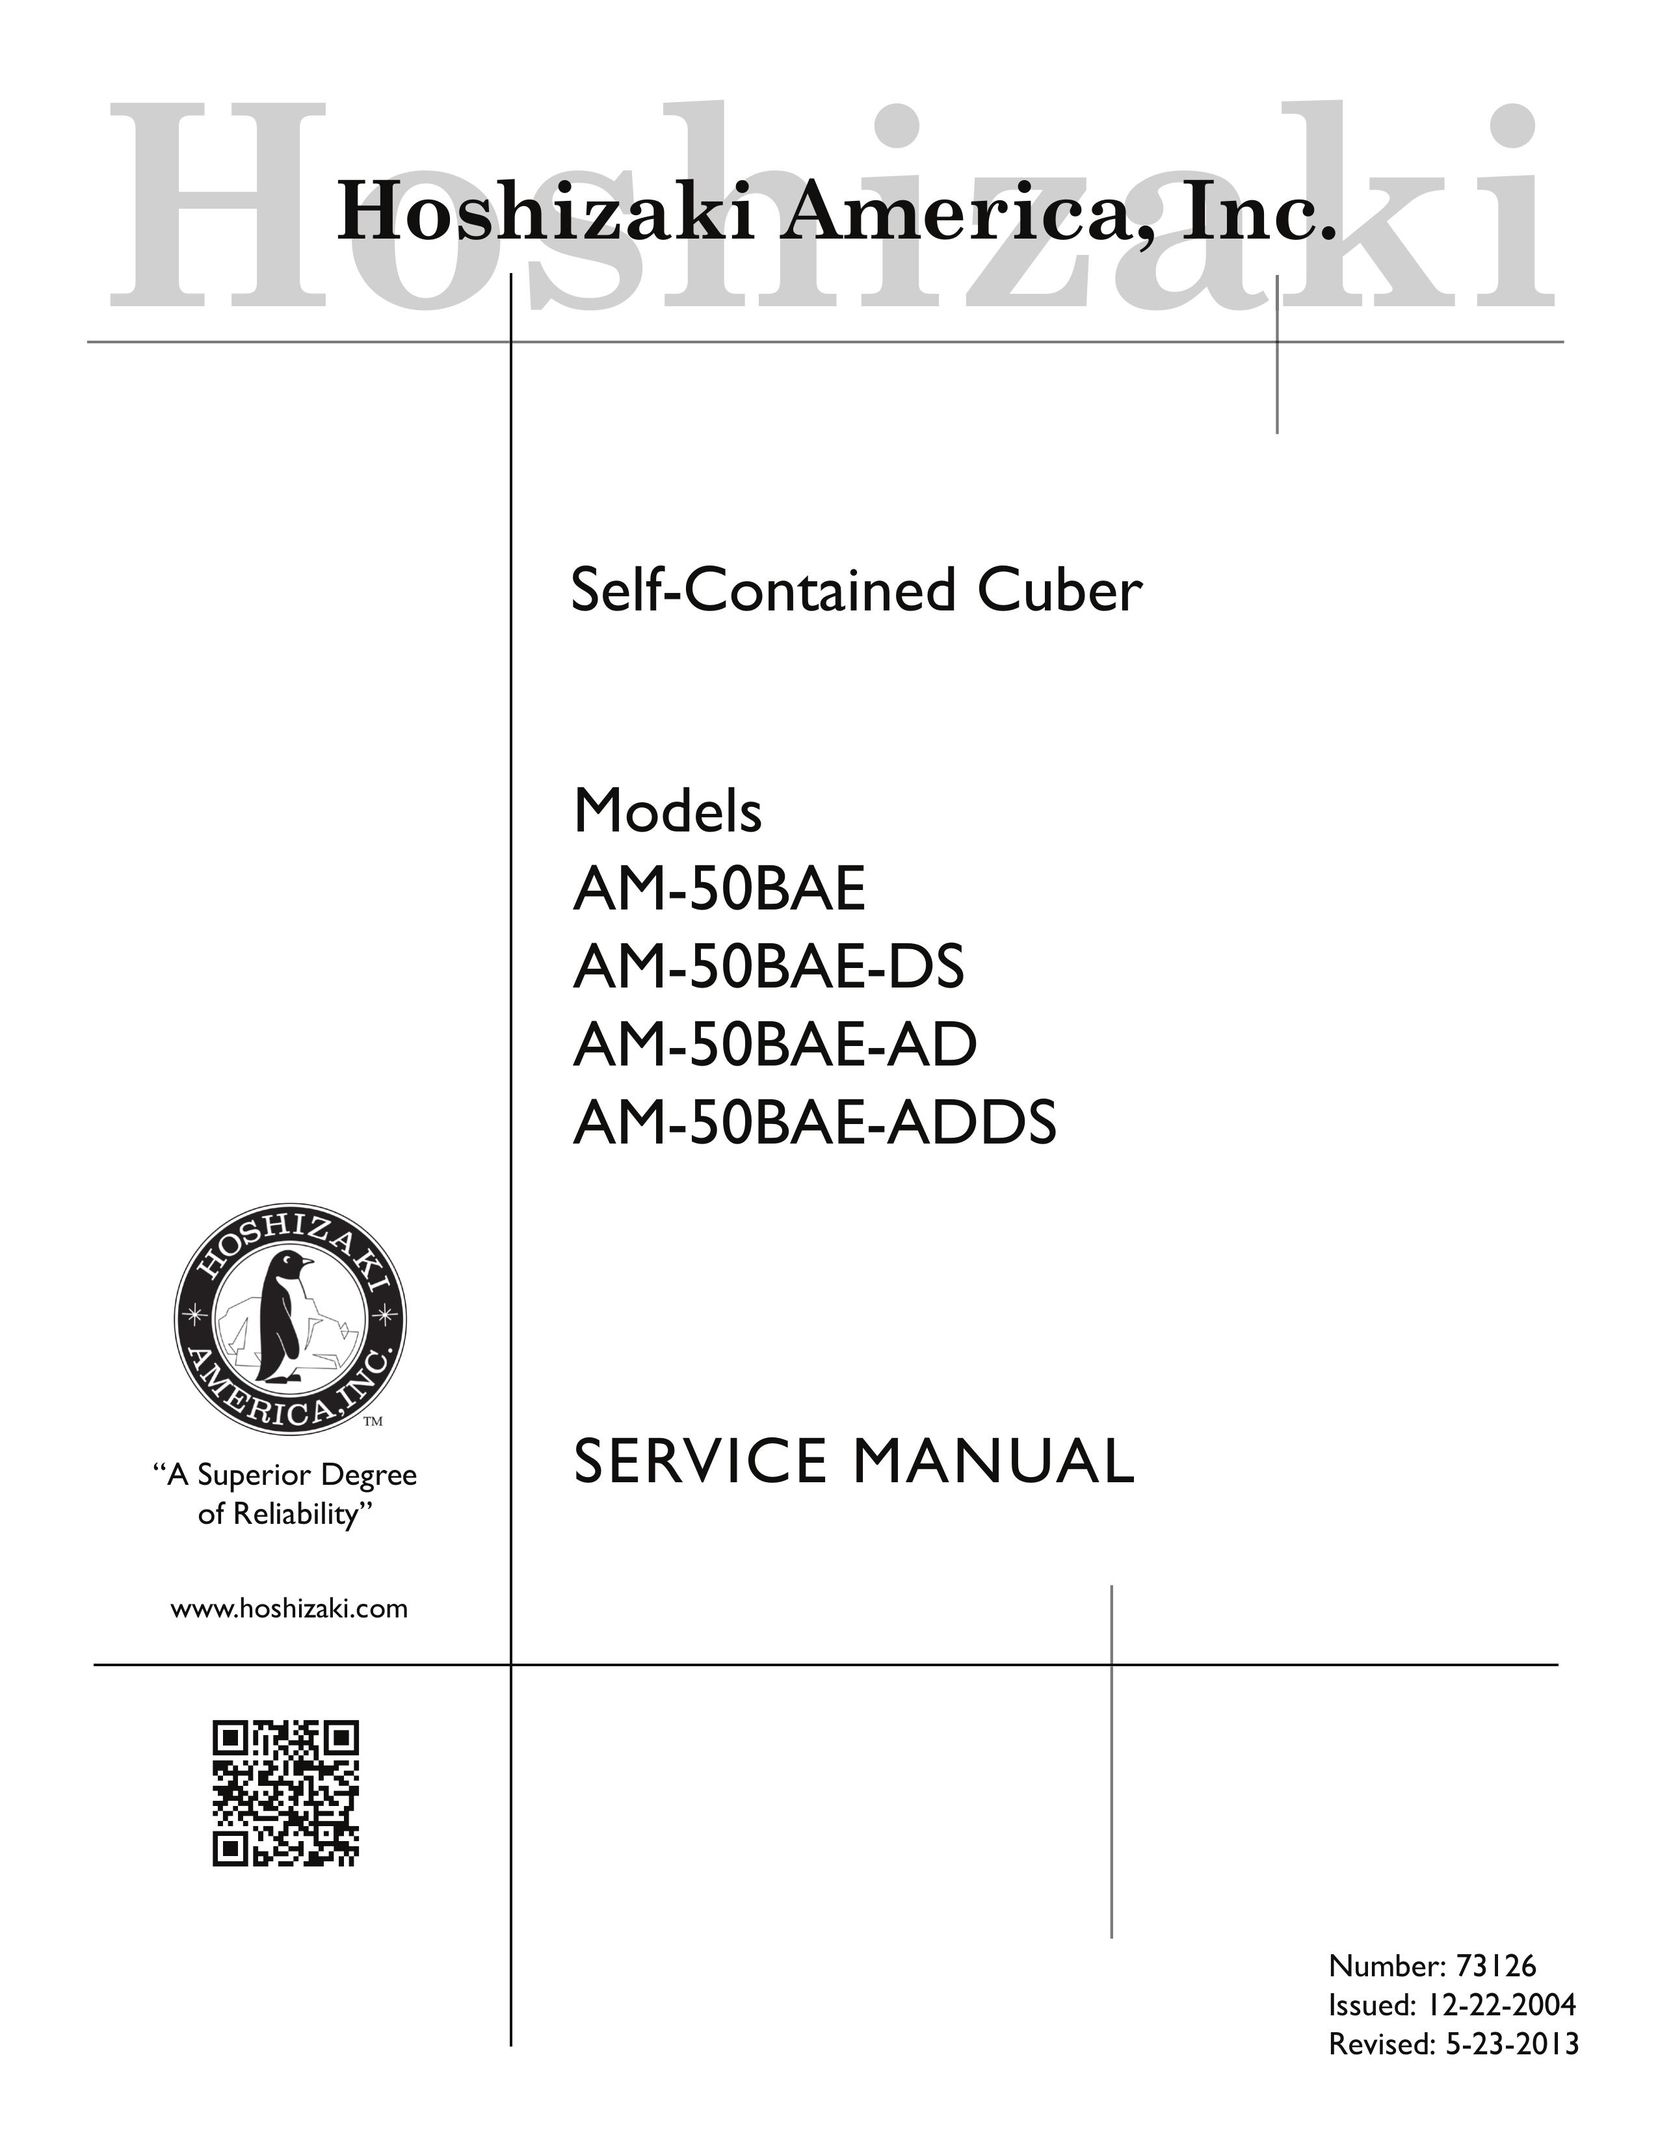 Hoshizaki AM-50BAE-ADDS Ice Maker User Manual